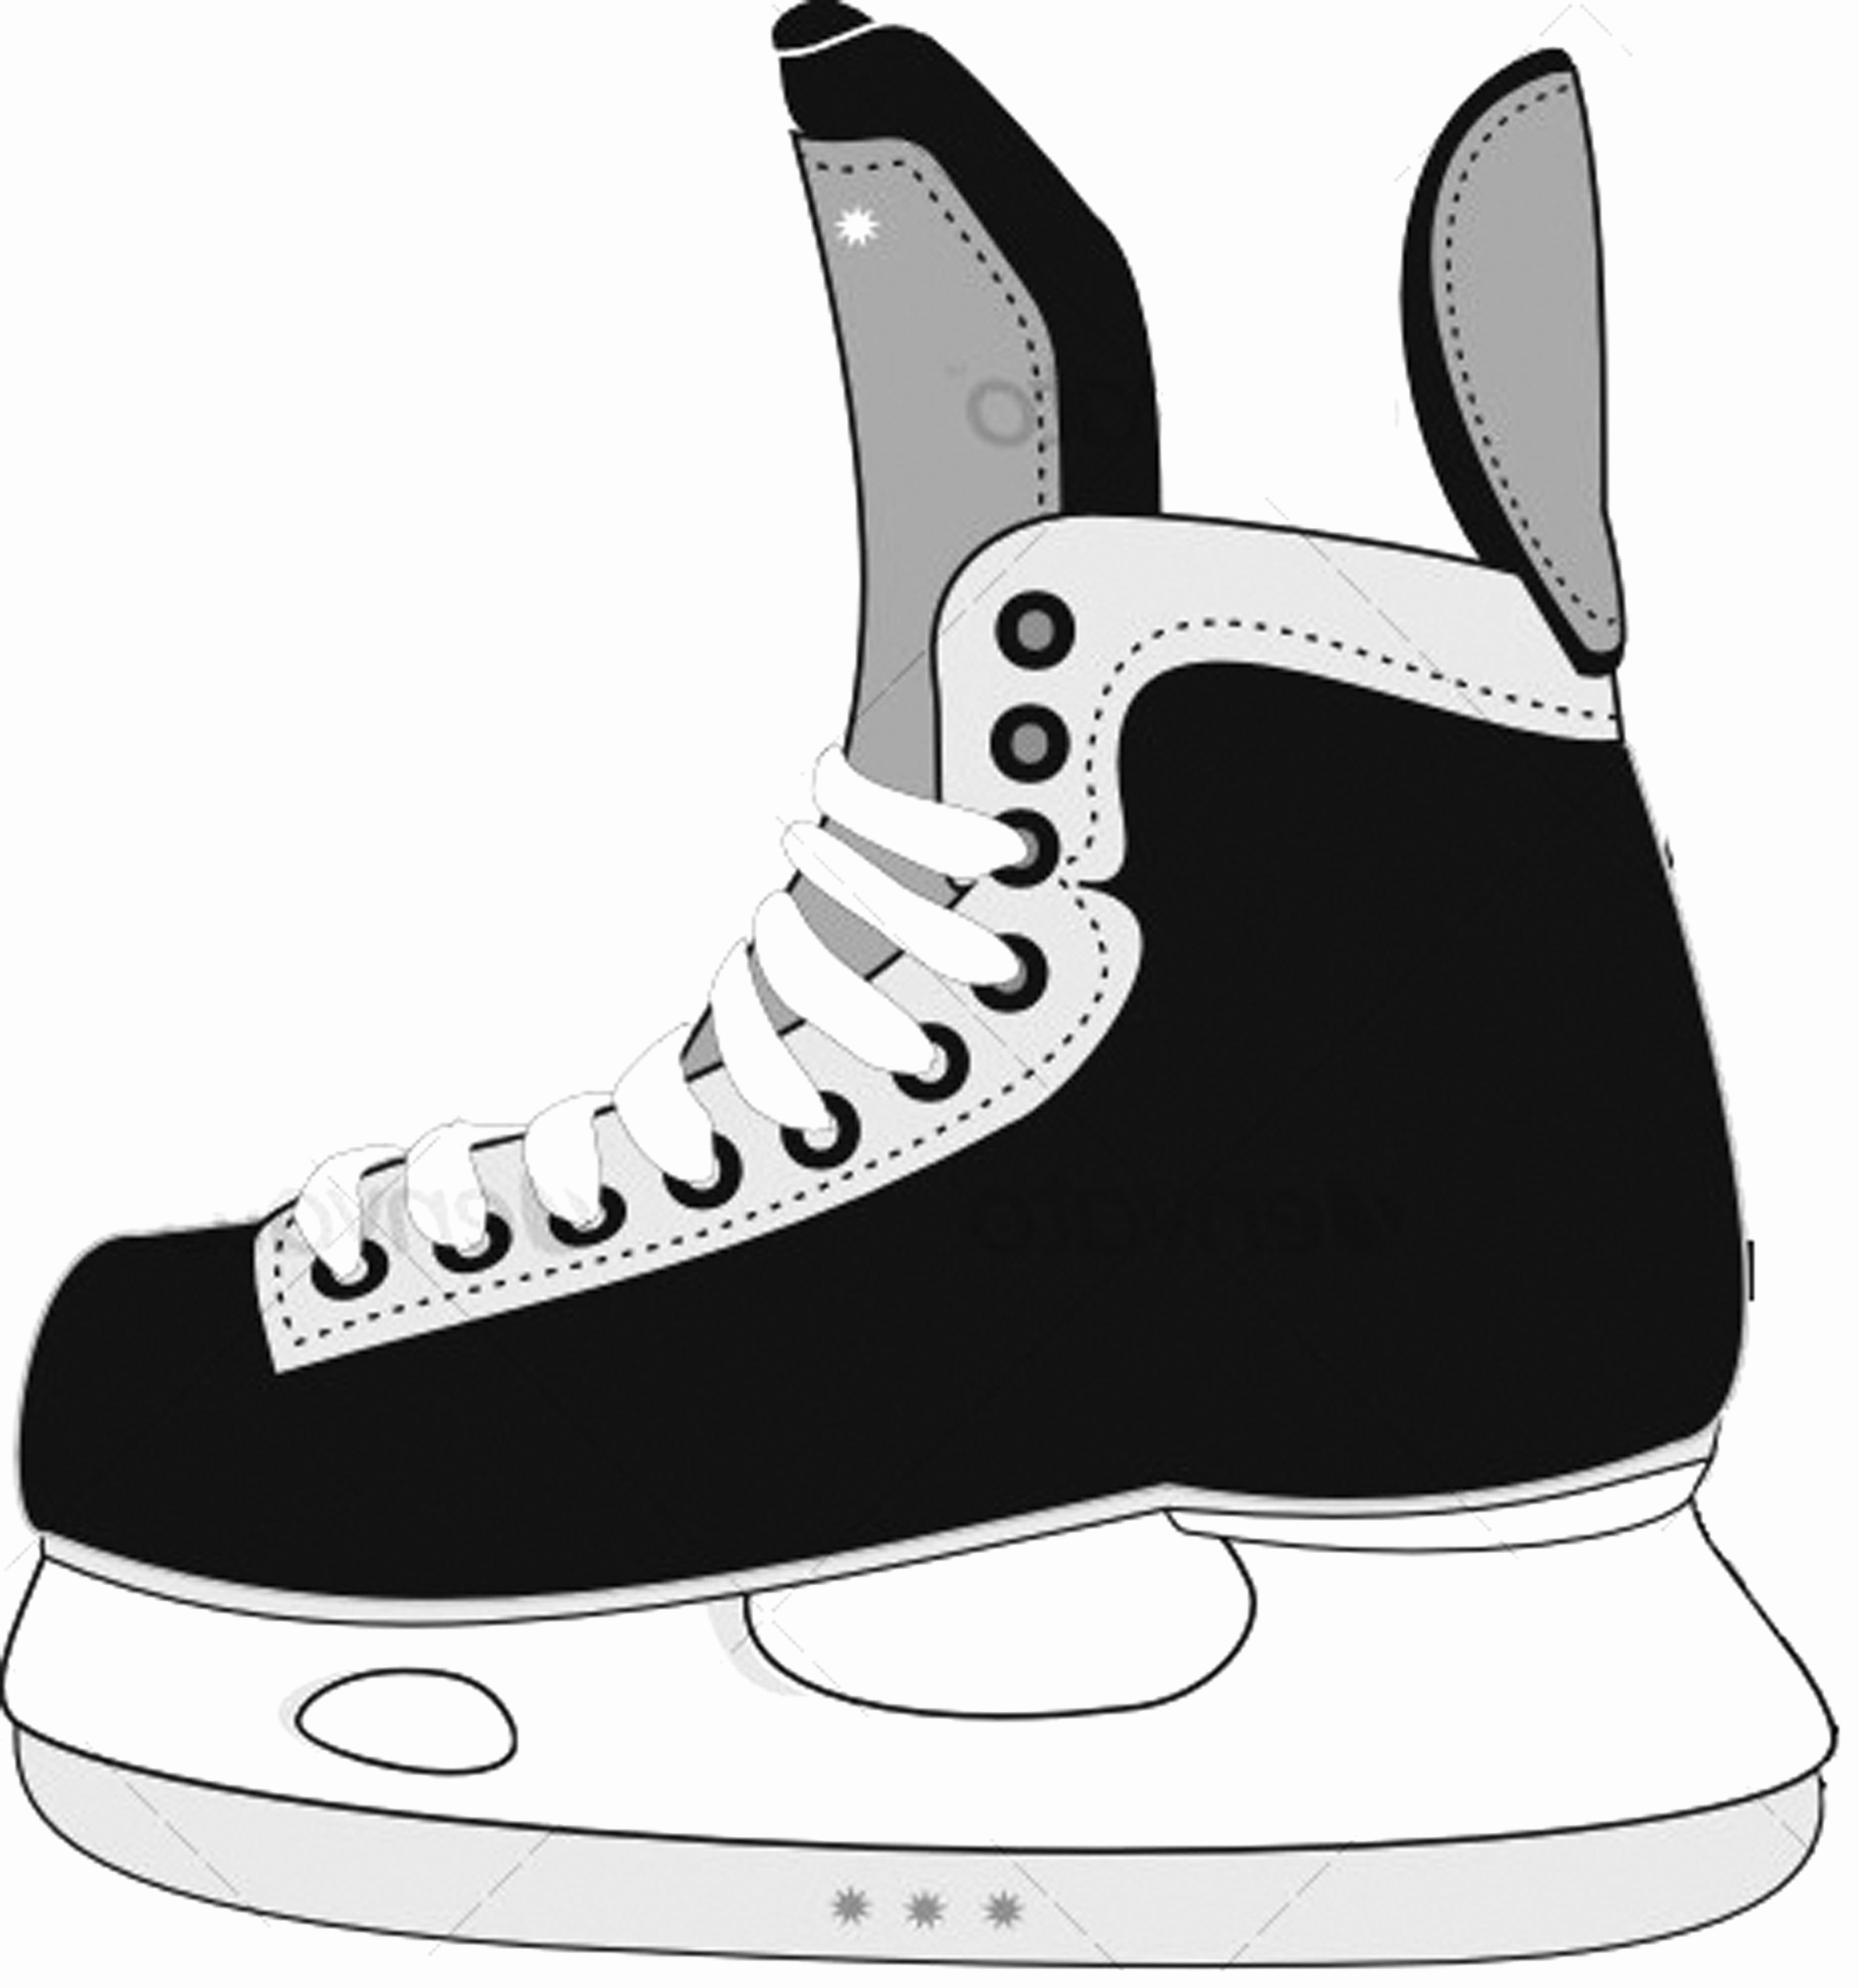 Hockey Skate Template Free Printable Unique Image Result for Hockey Skate Template Free Printable